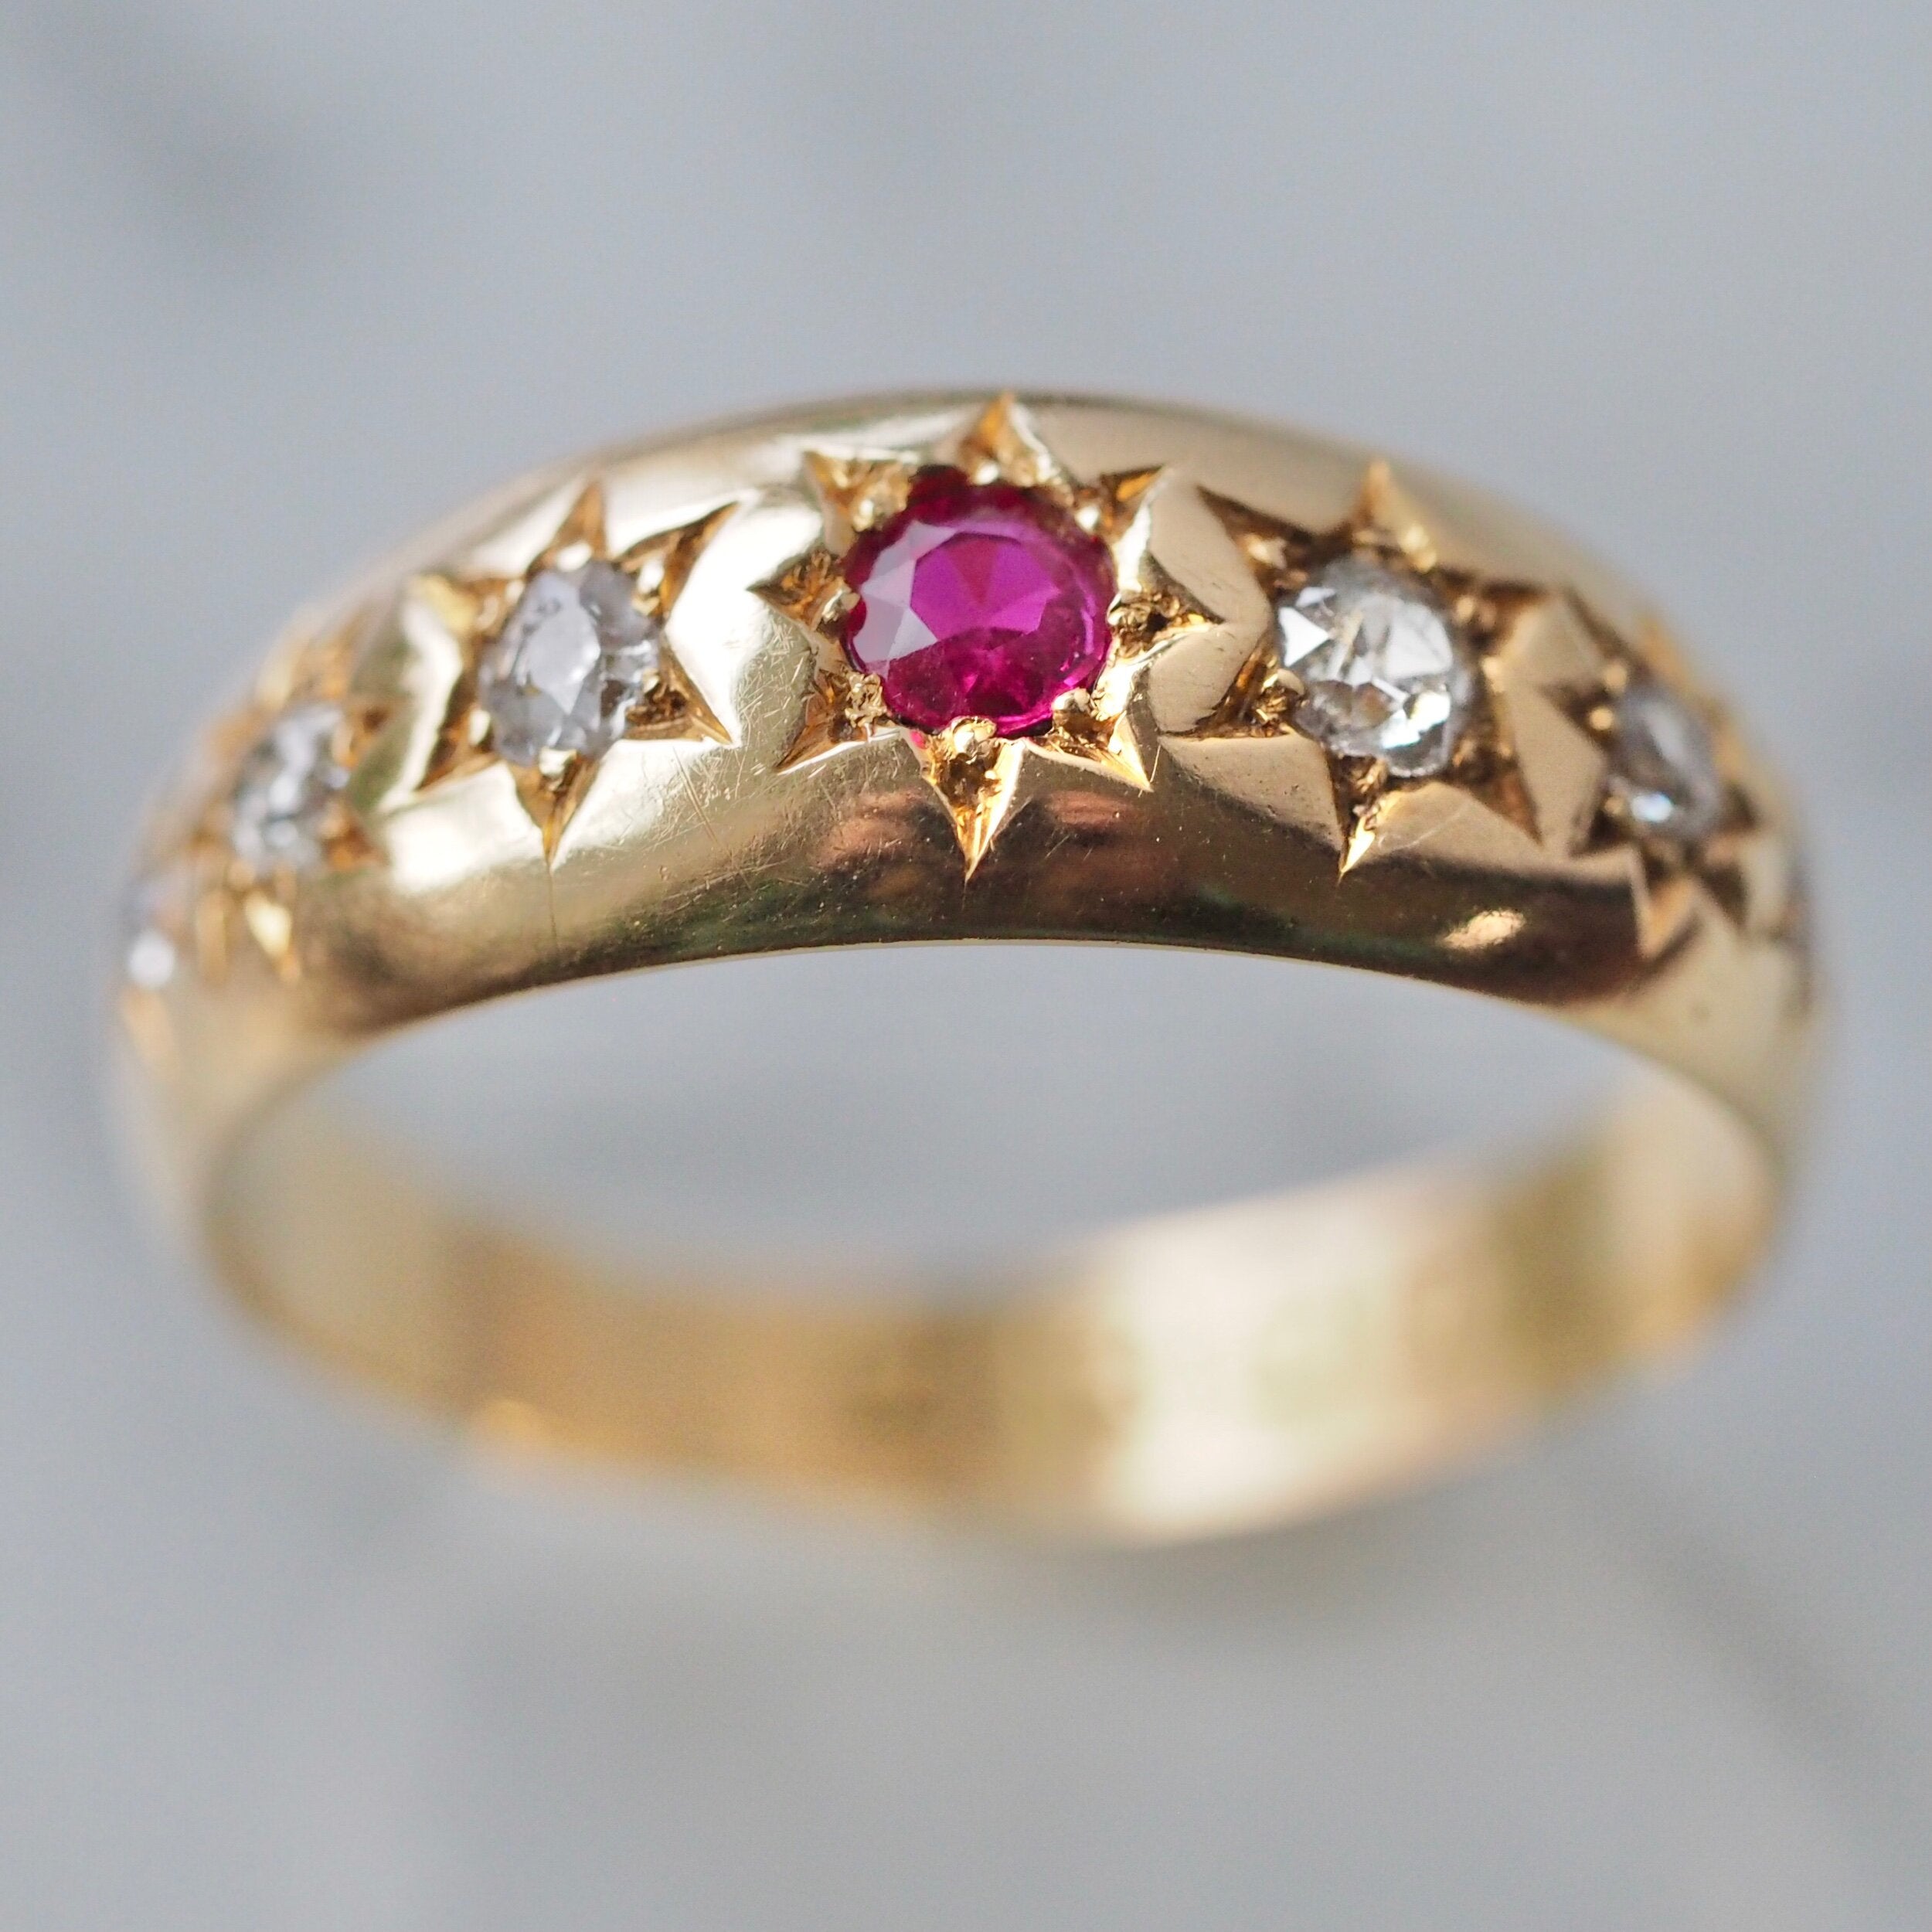 Antique English c. 1897 18k Gold Flush Set Ruby and Old Mine Cut Diamond Ring